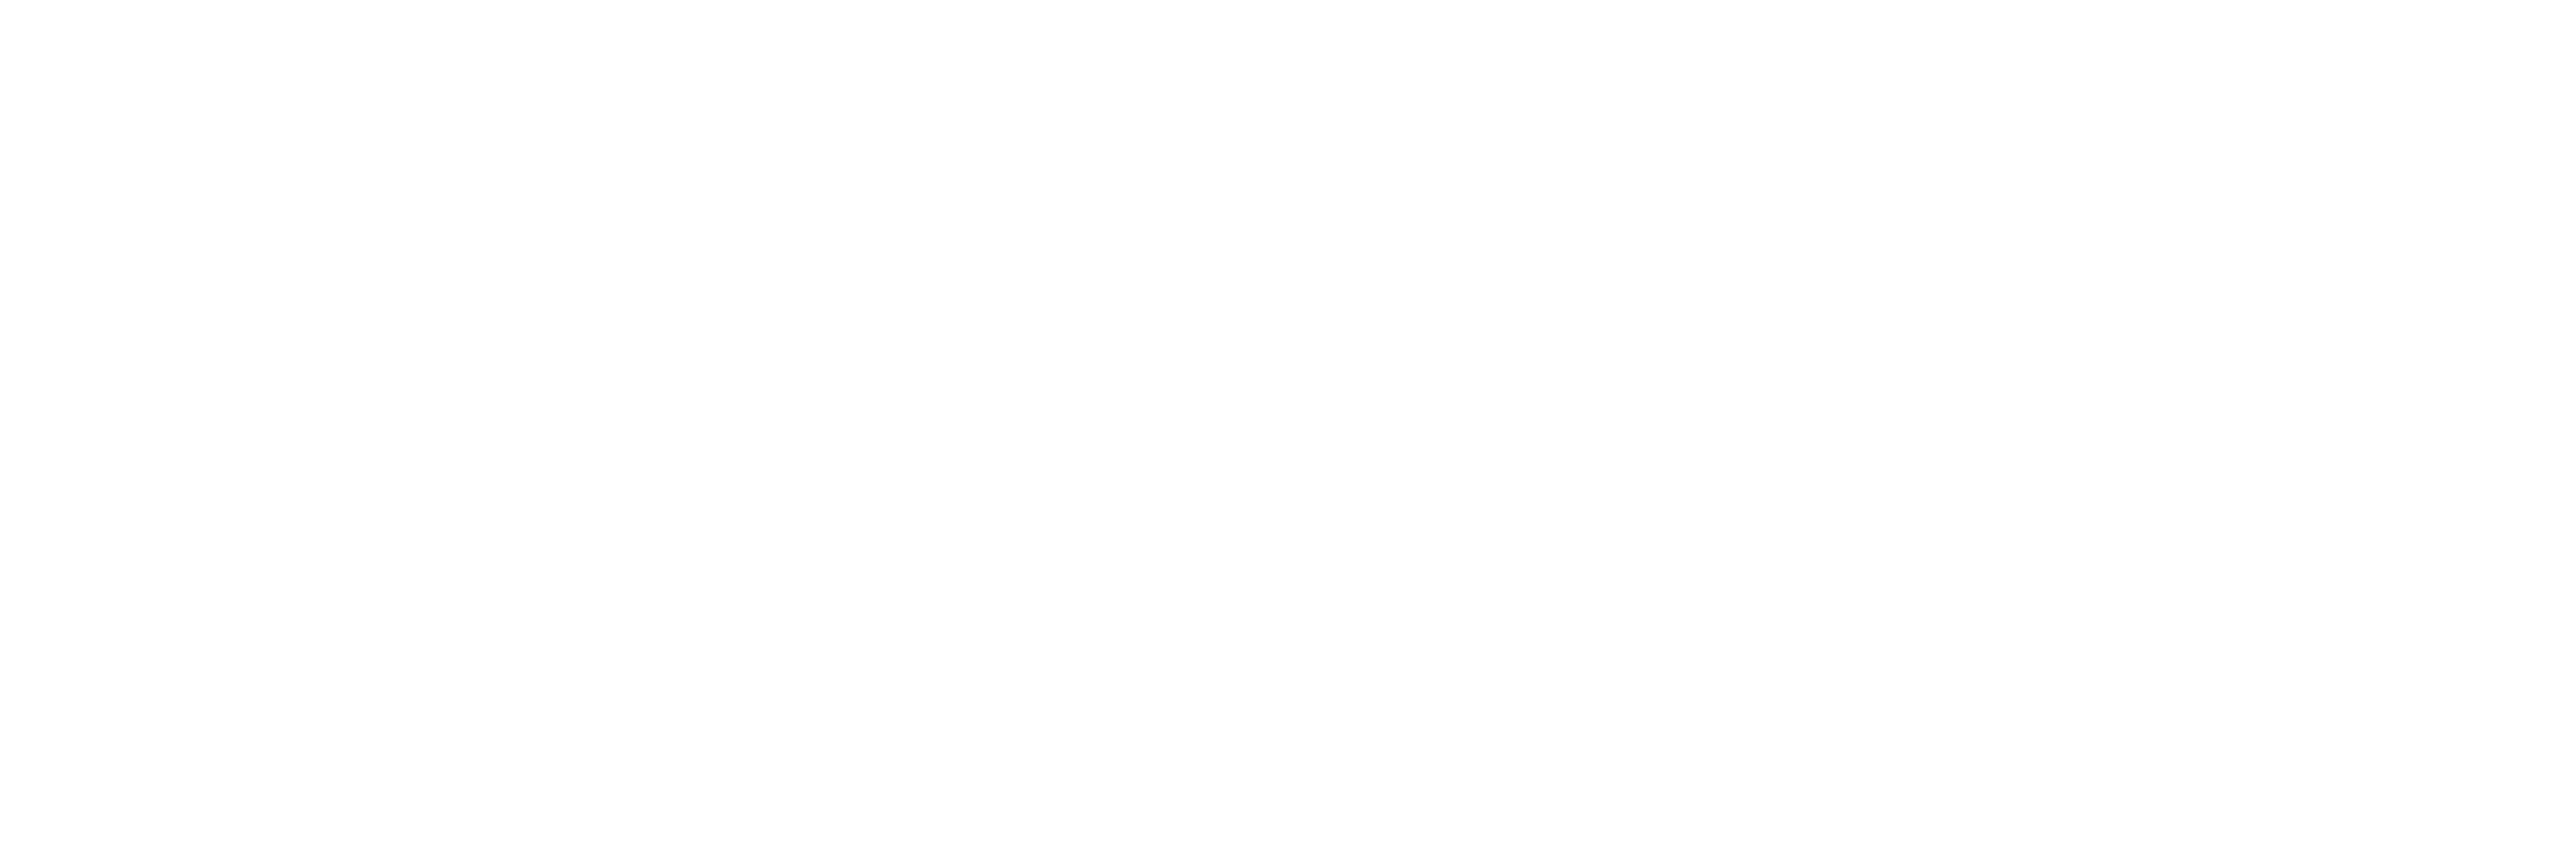 Lugar Studio